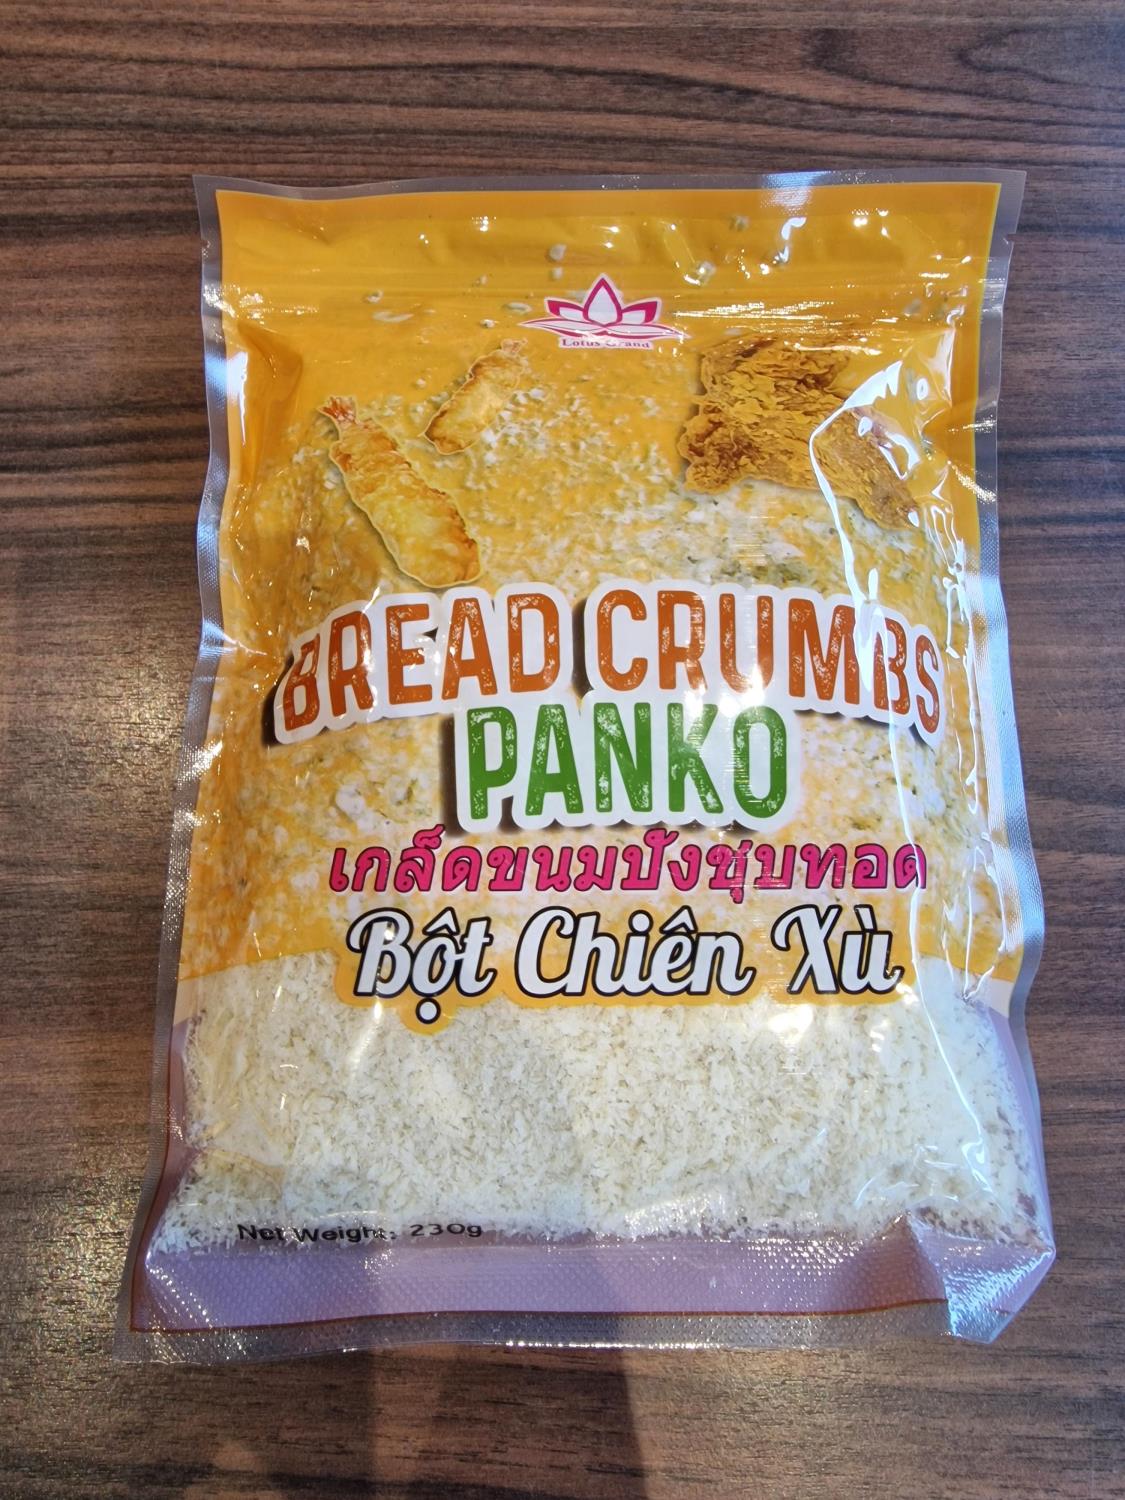 Bread crunmbs Panko